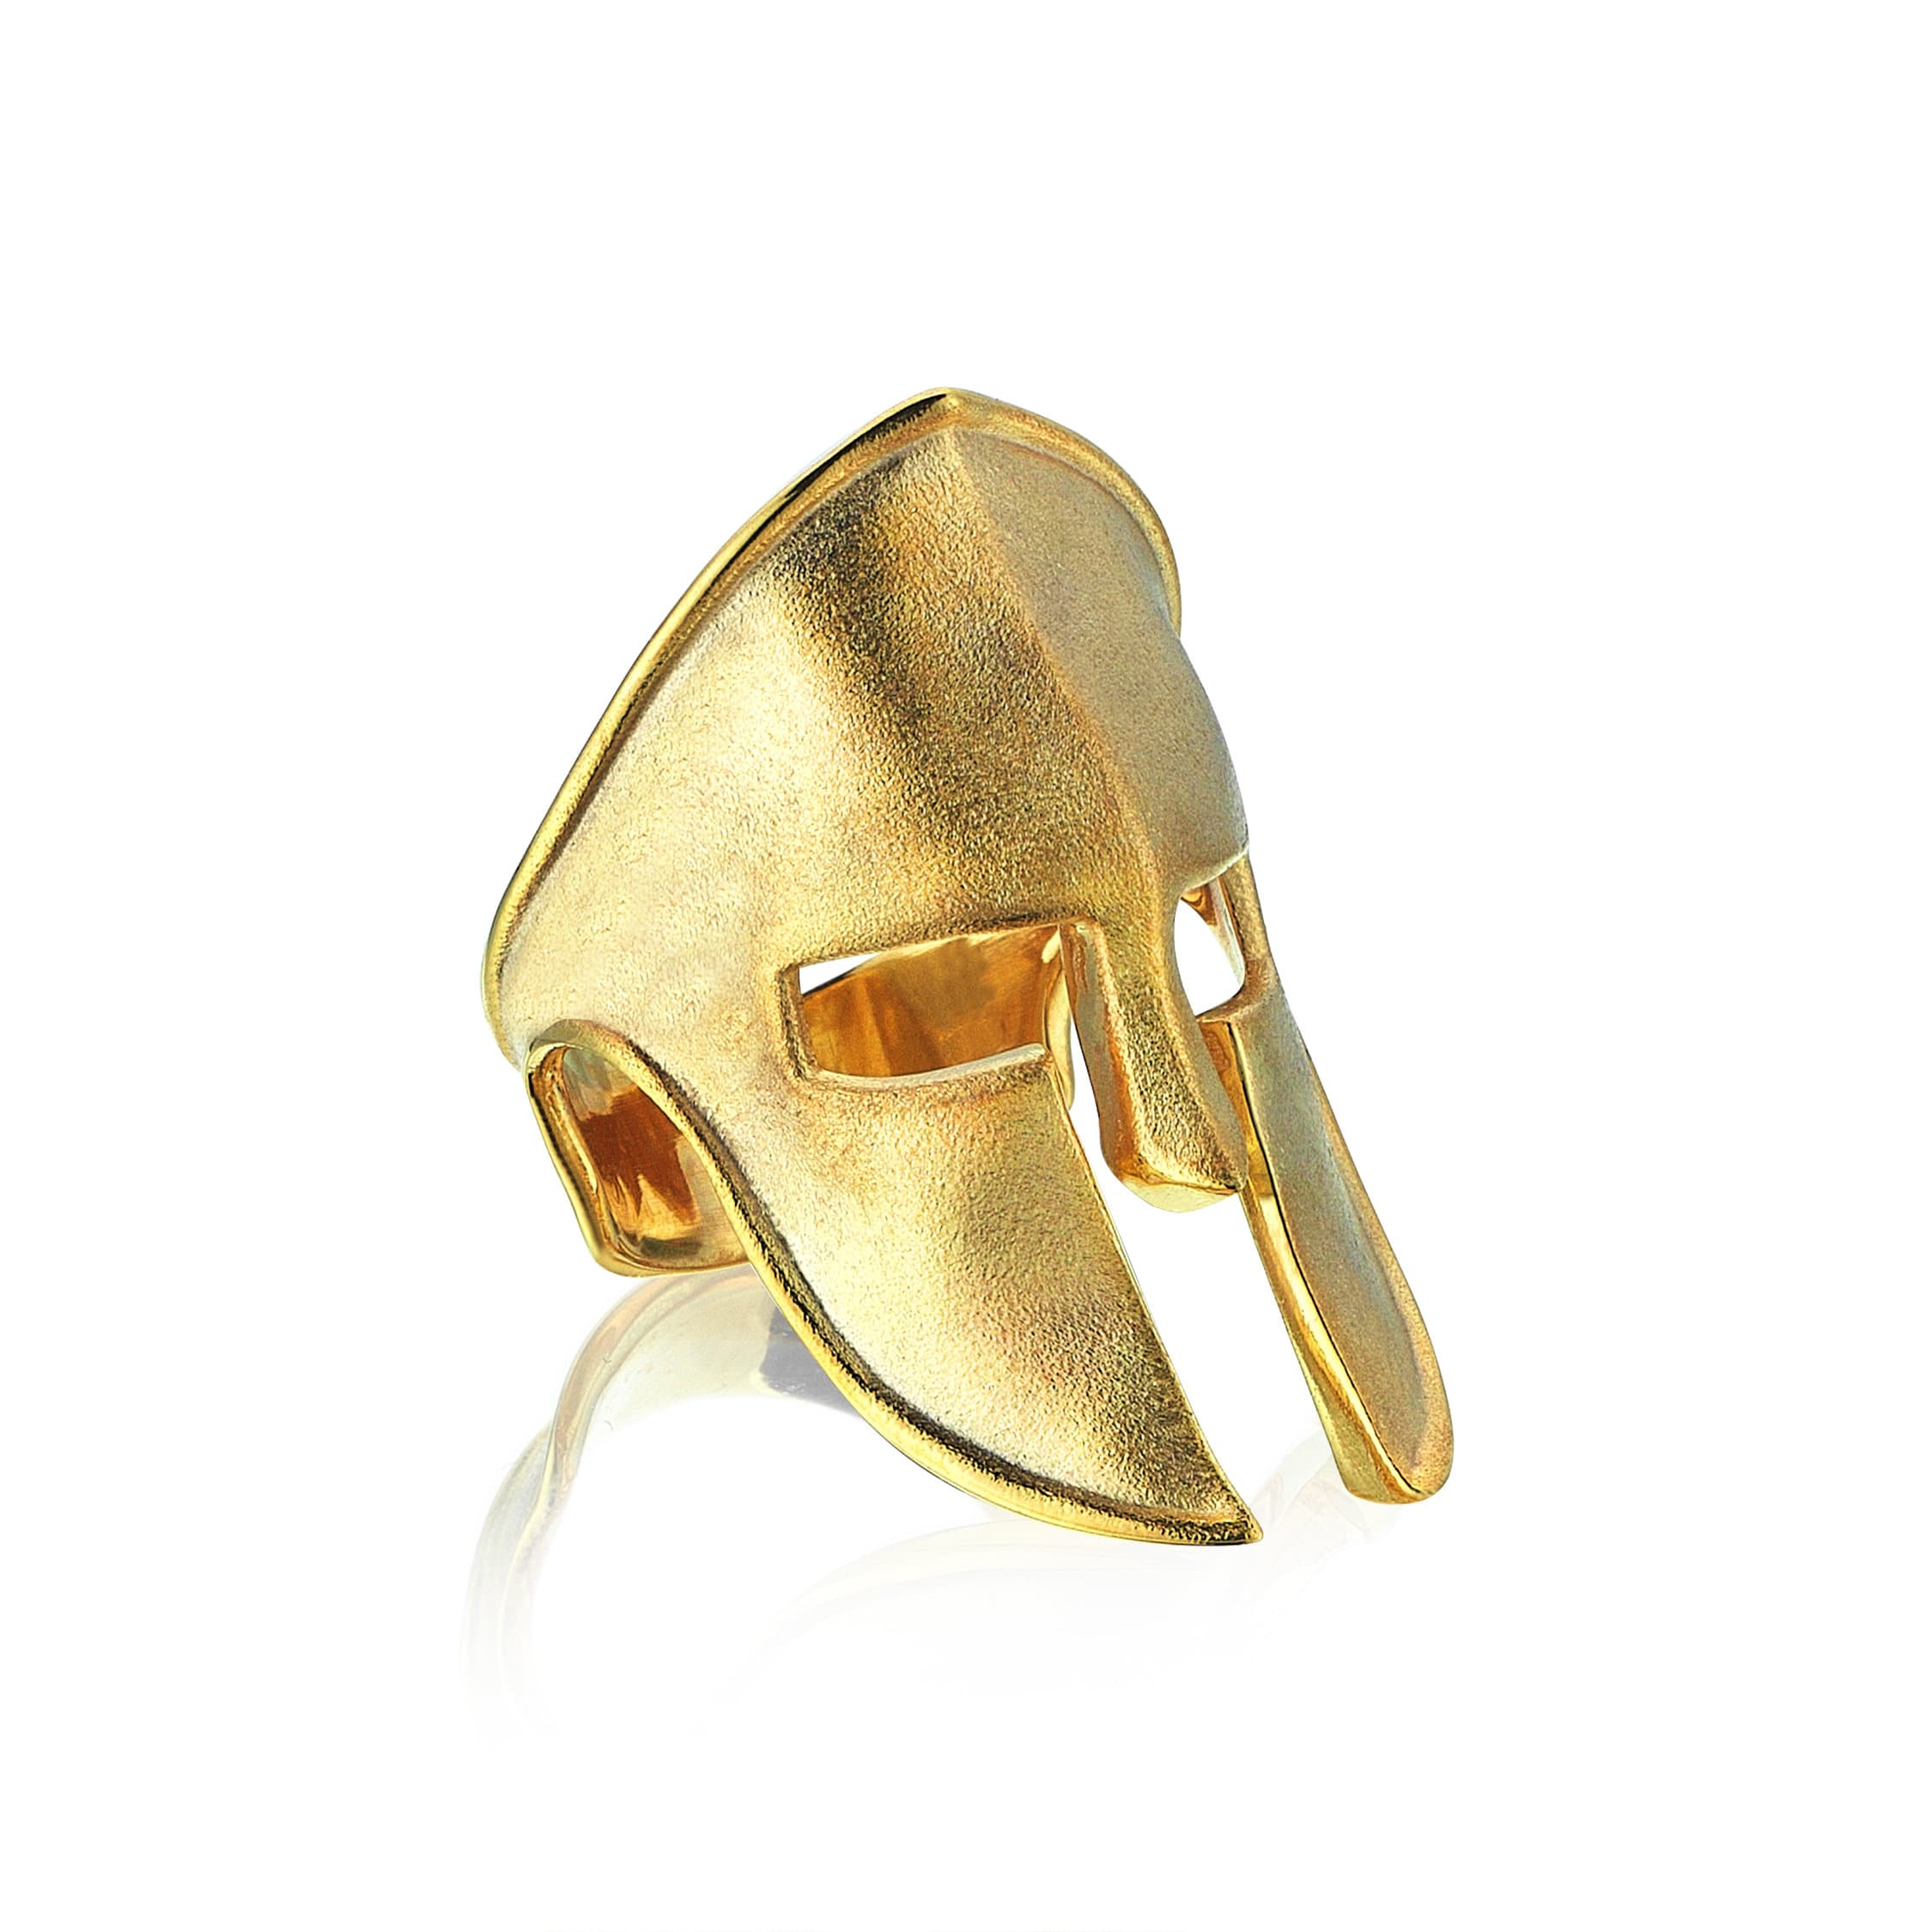 Gladiator Helmet Motif Cool Style 925K Sterling Silver Men's Ring | eBay